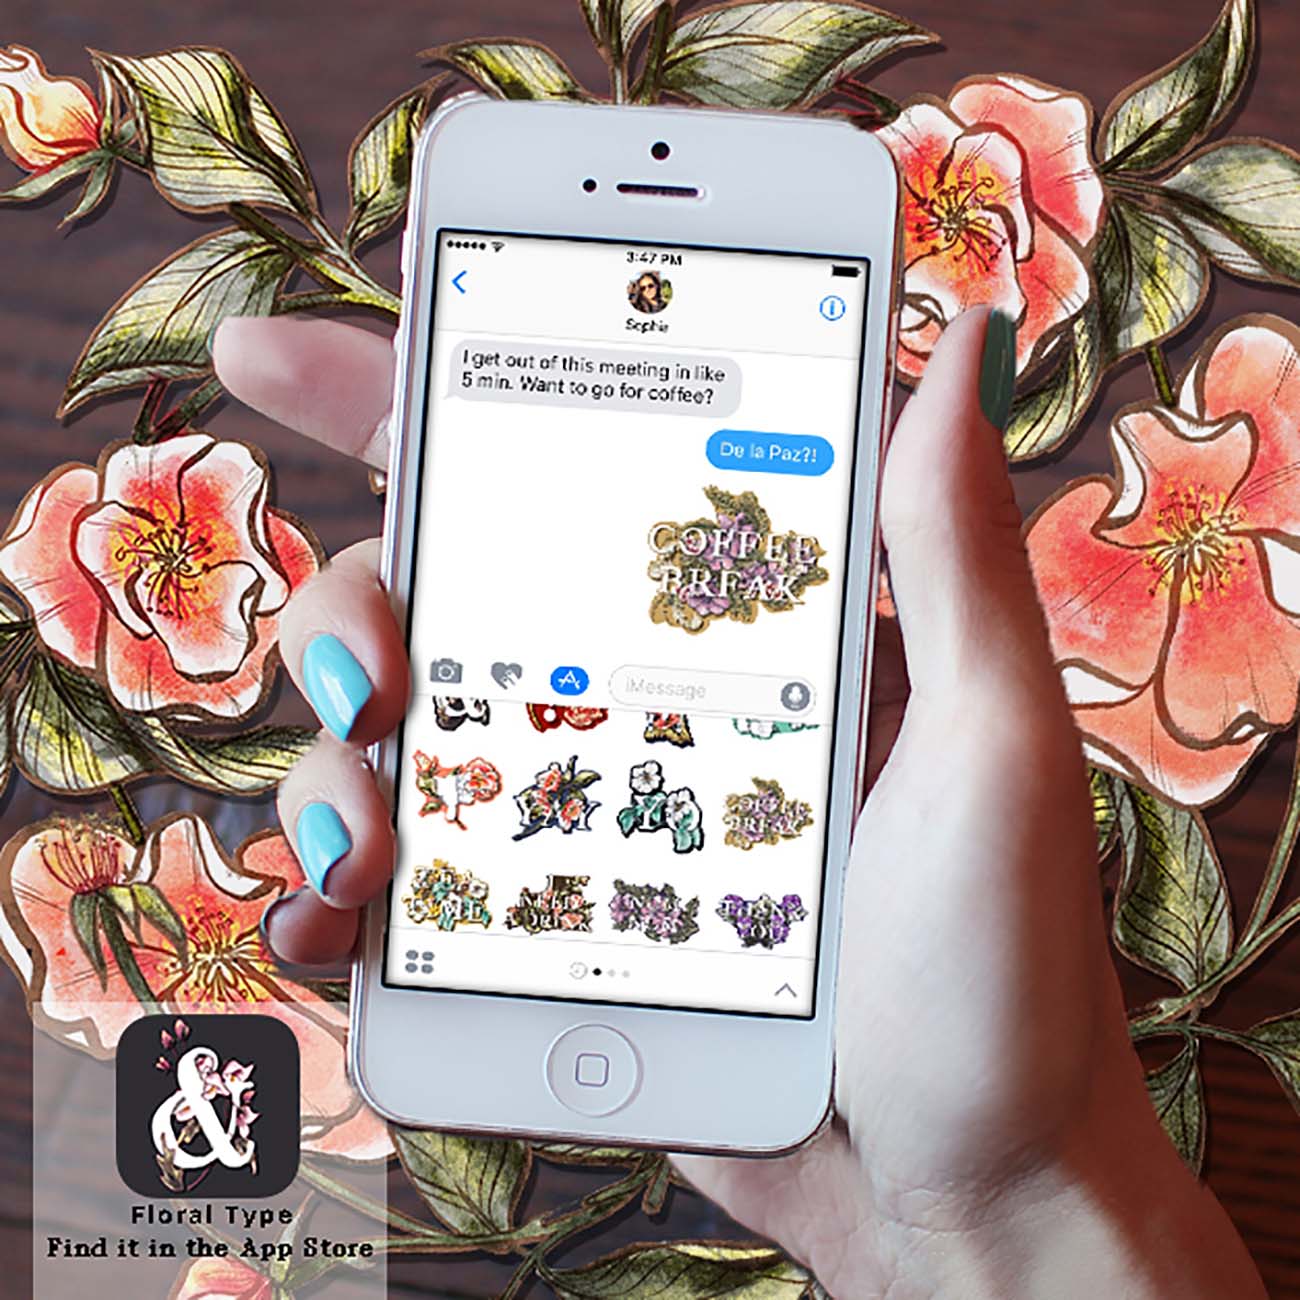 Floral Type app advertisement